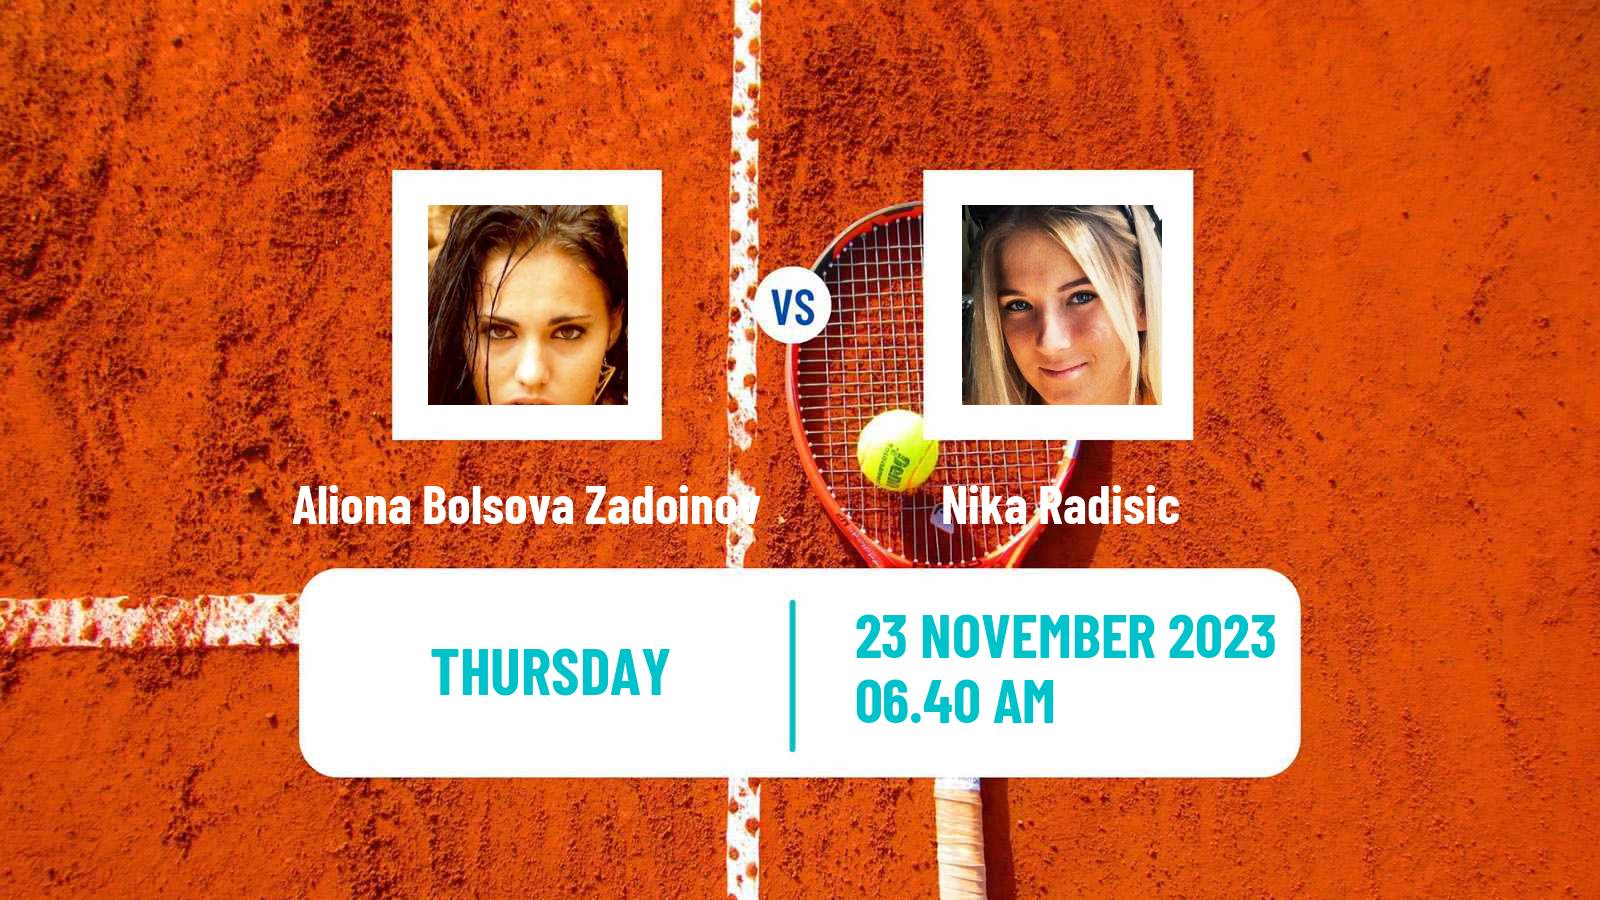 Tennis ITF W100 Valencia Women Aliona Bolsova Zadoinov - Nika Radisic